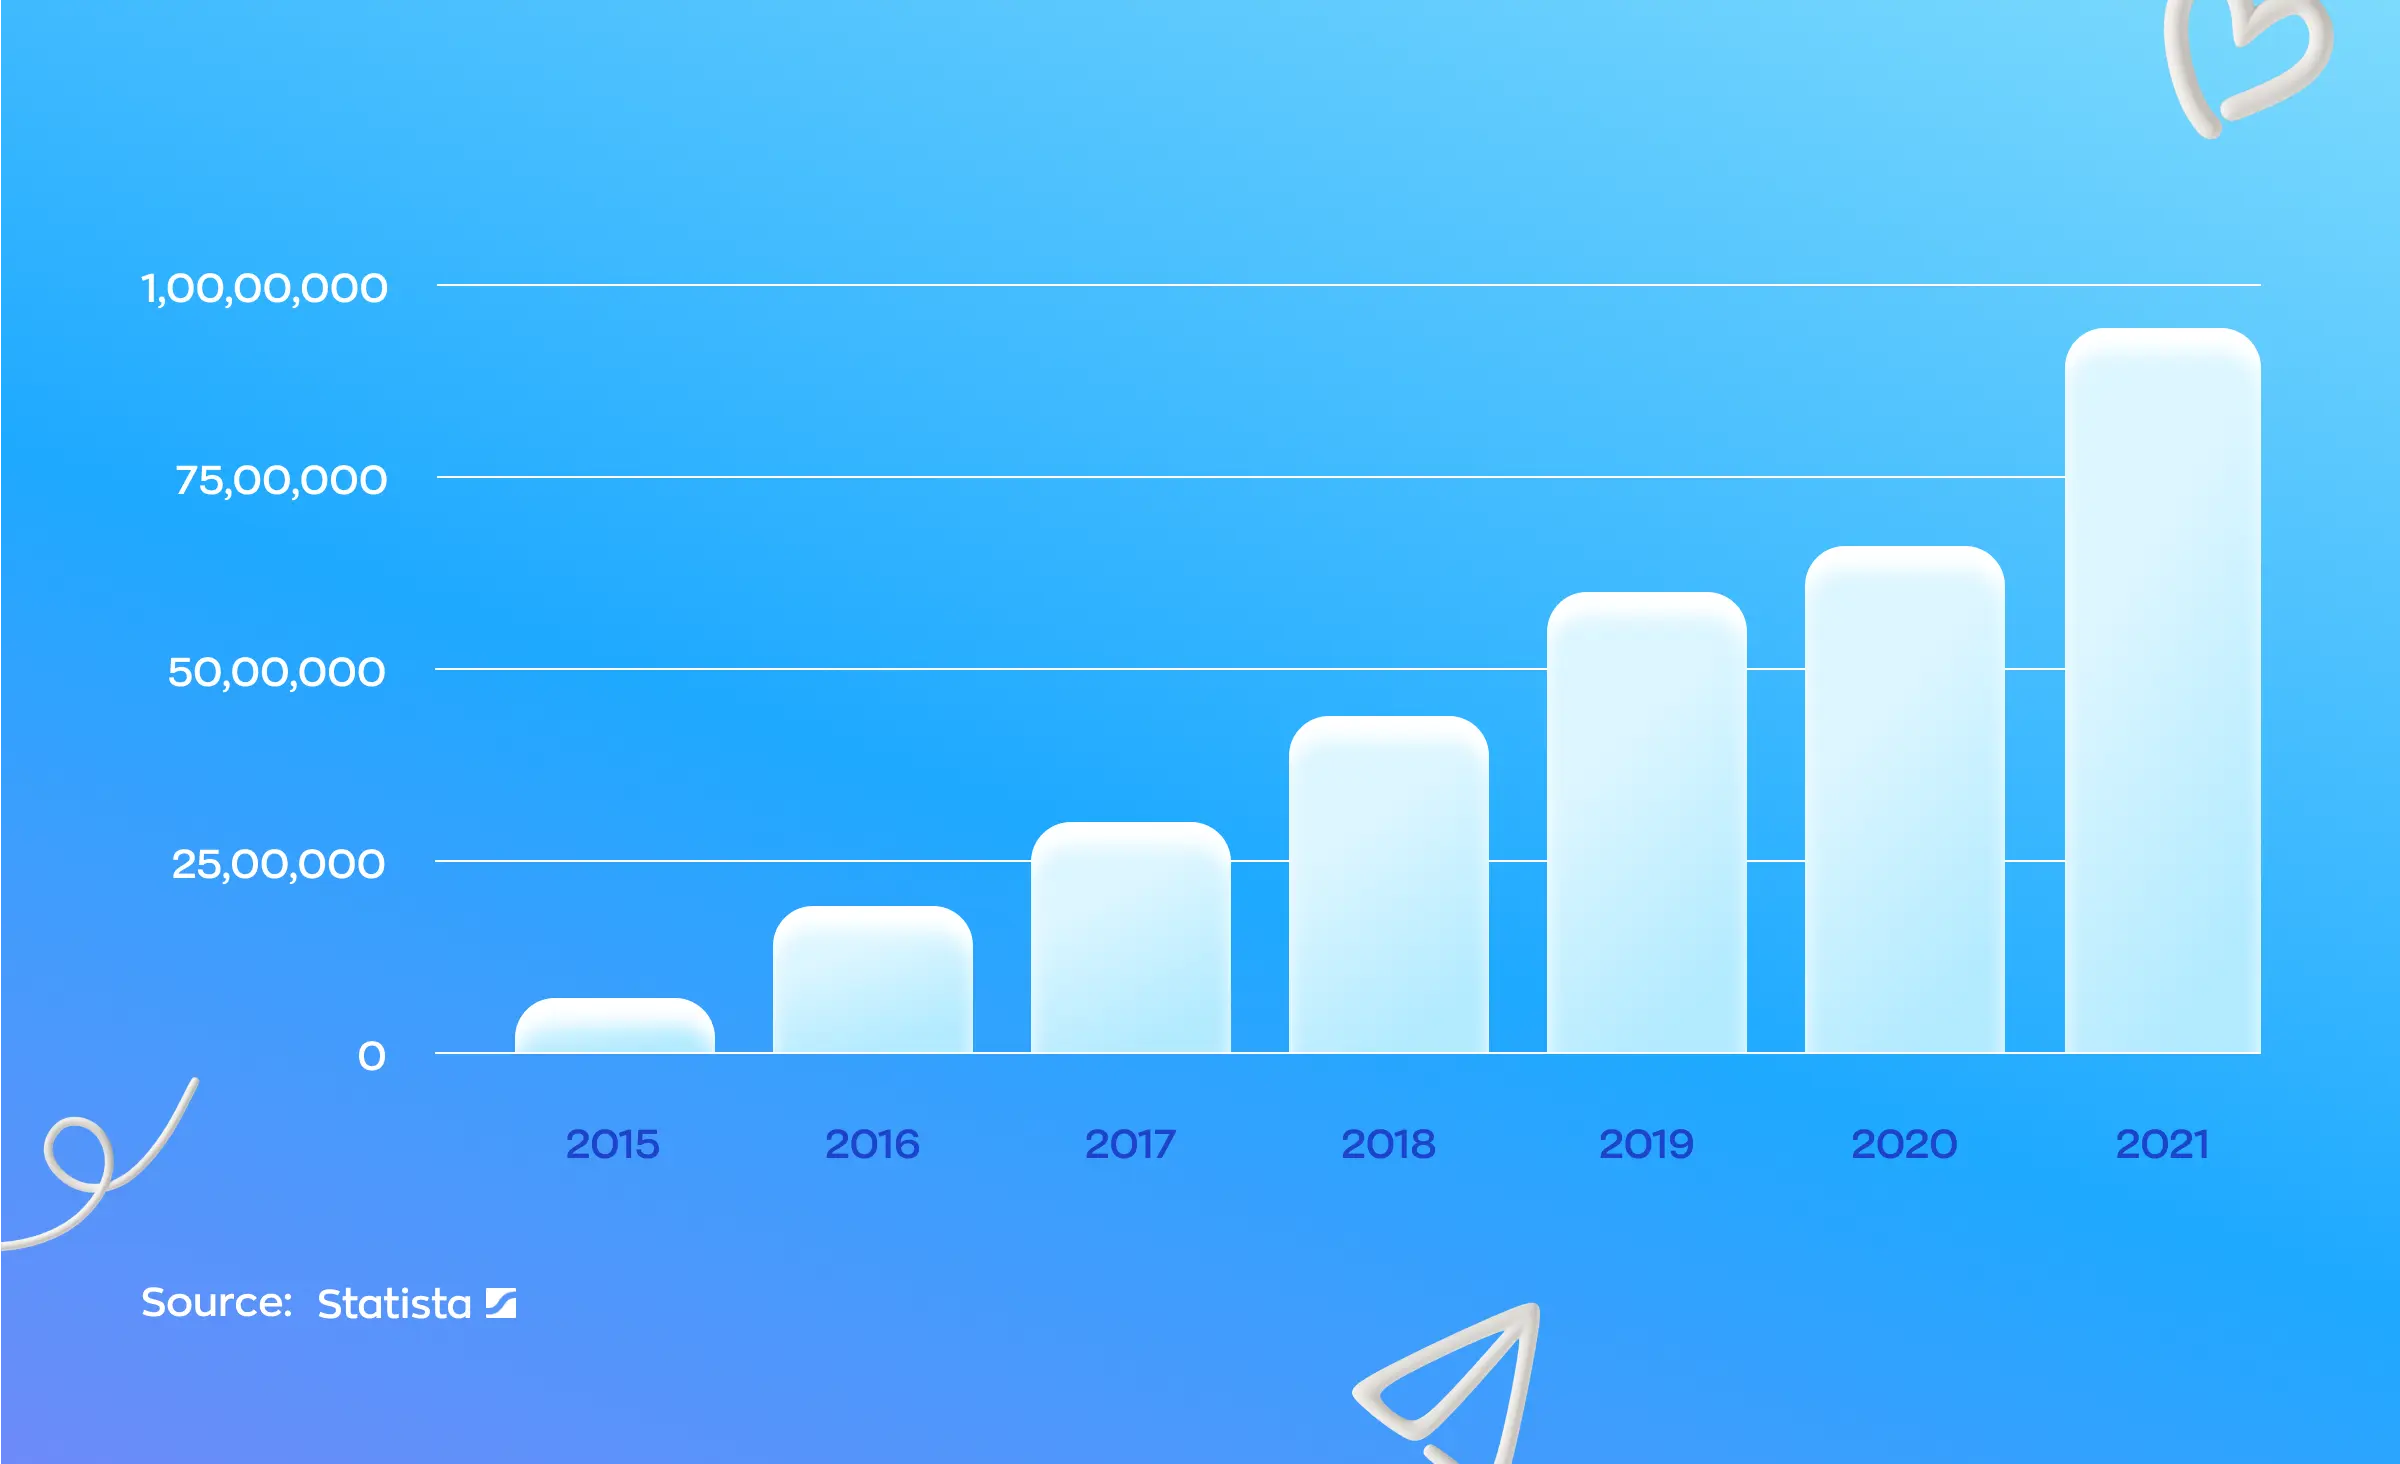 how to make an app like tinder: Tinder’s user growth statistics